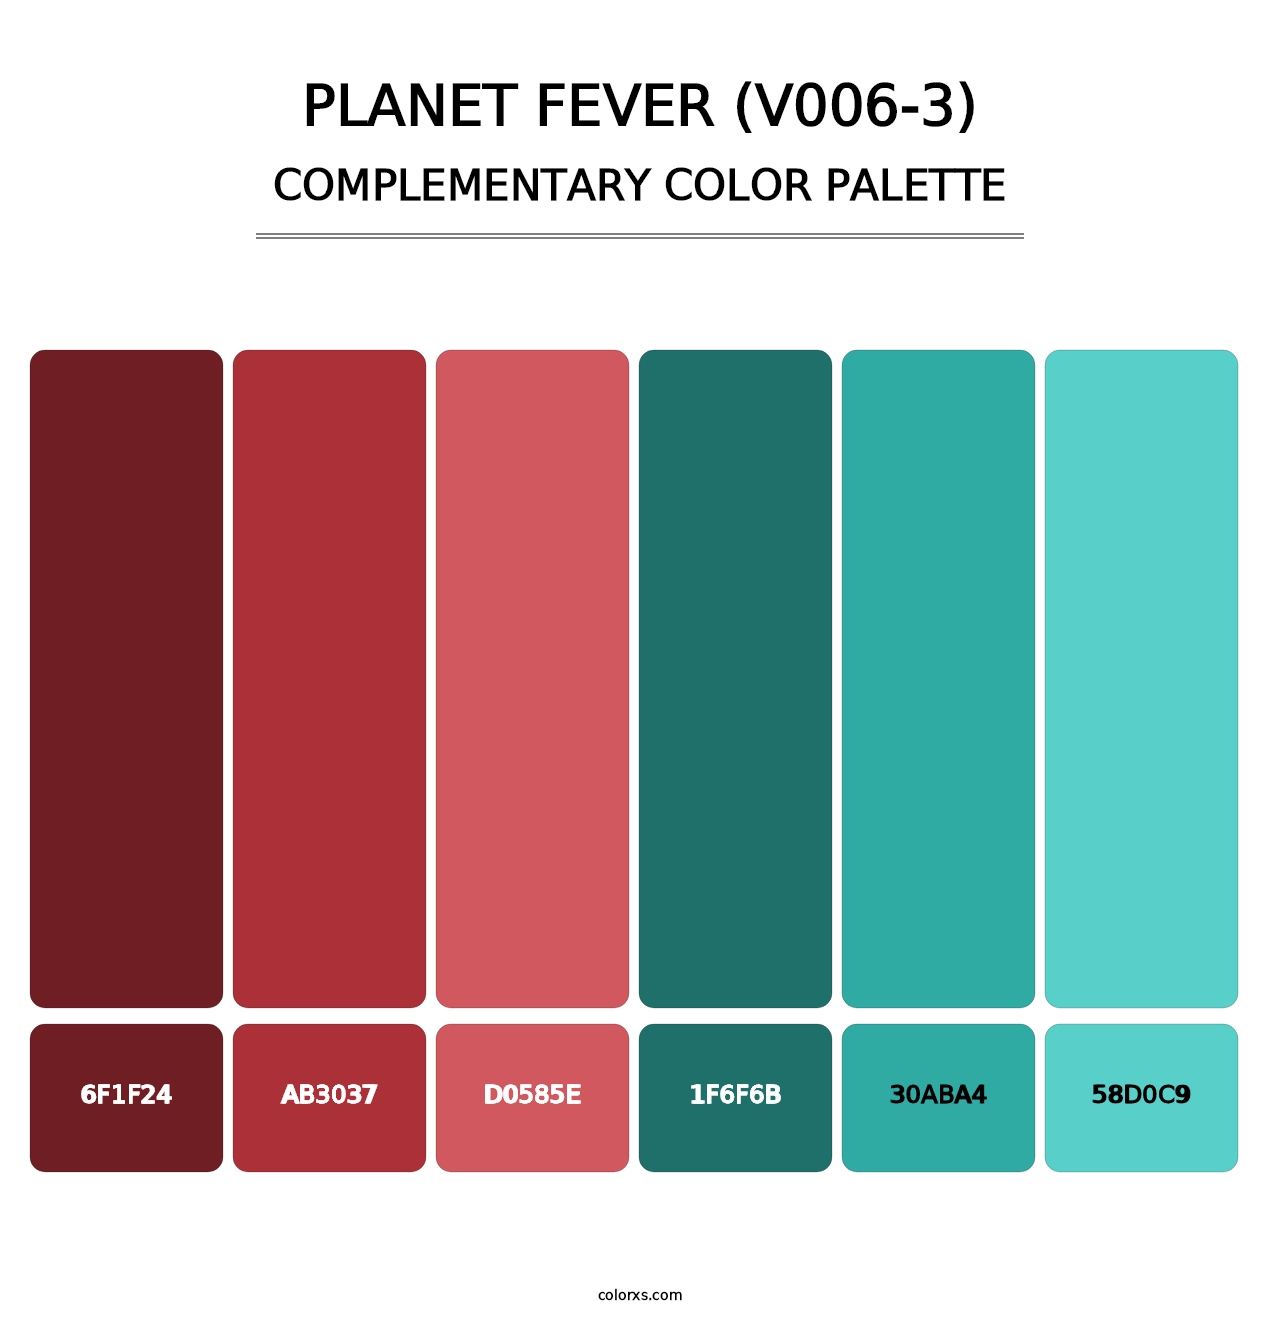 Planet Fever (V006-3) - Complementary Color Palette